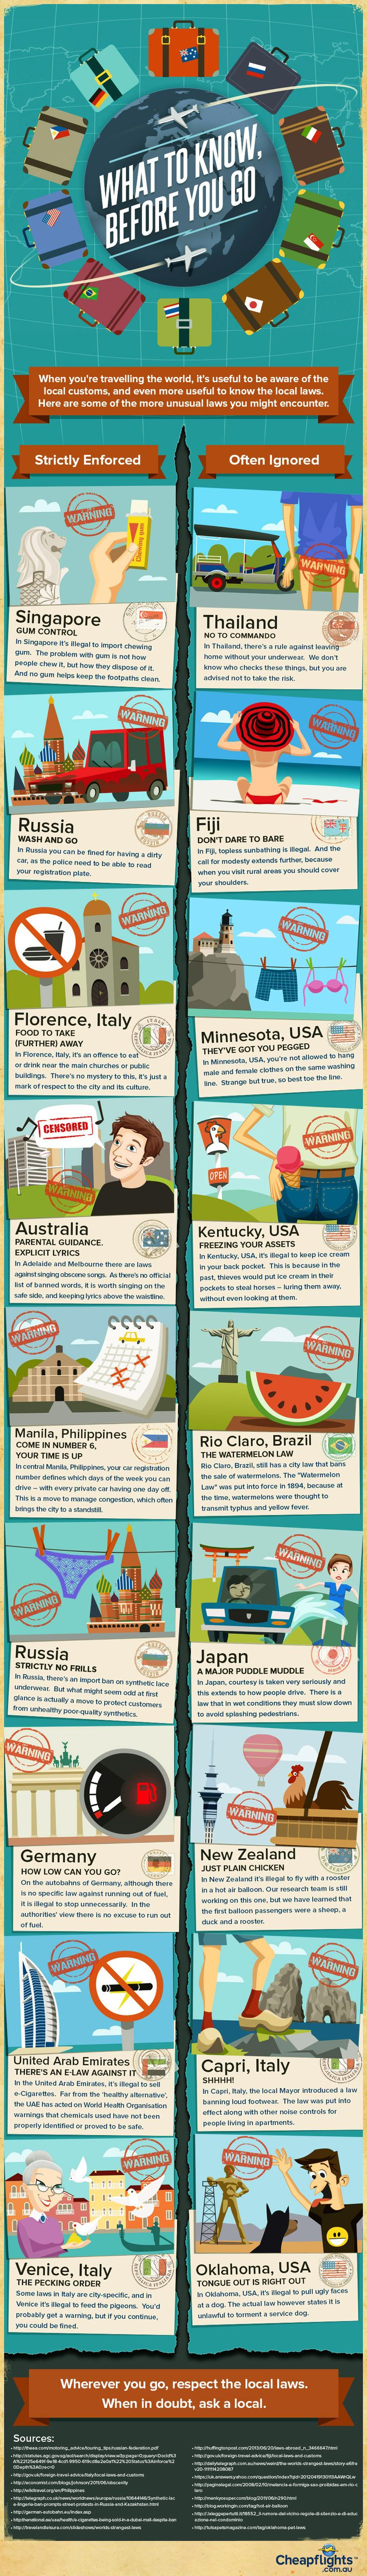 Strange Laws Around the World #infographic